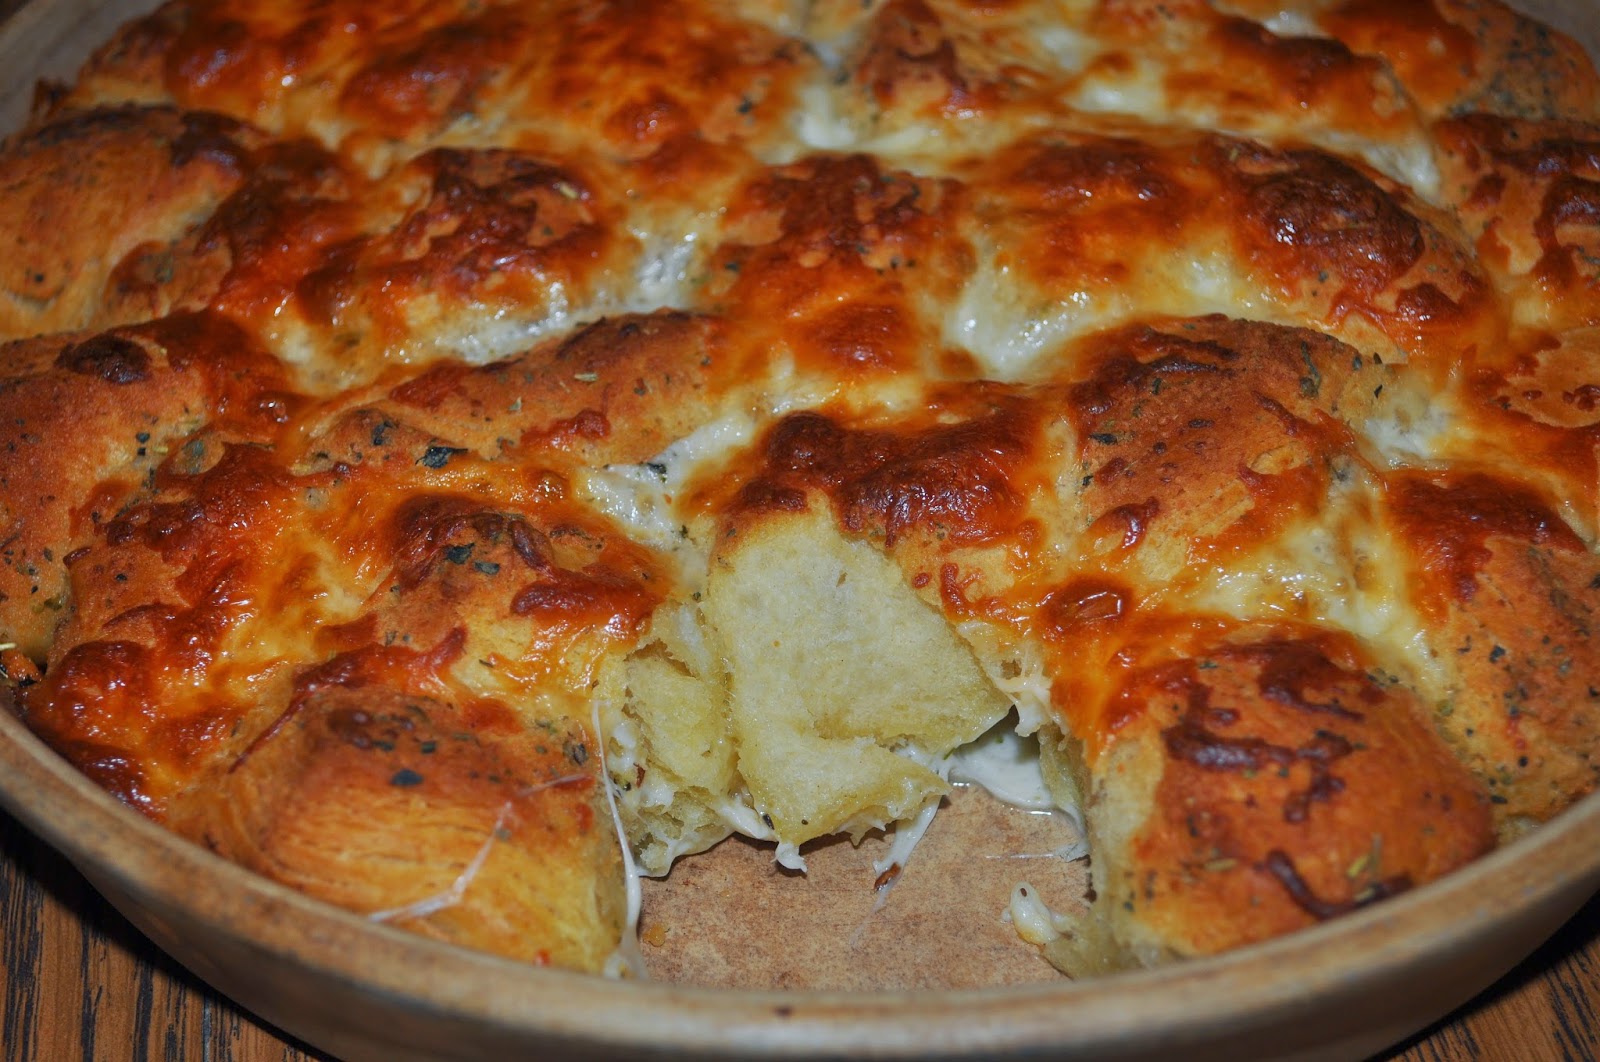 Beth's Favorite Recipes: Parmesan-Garlic Monkey Bread